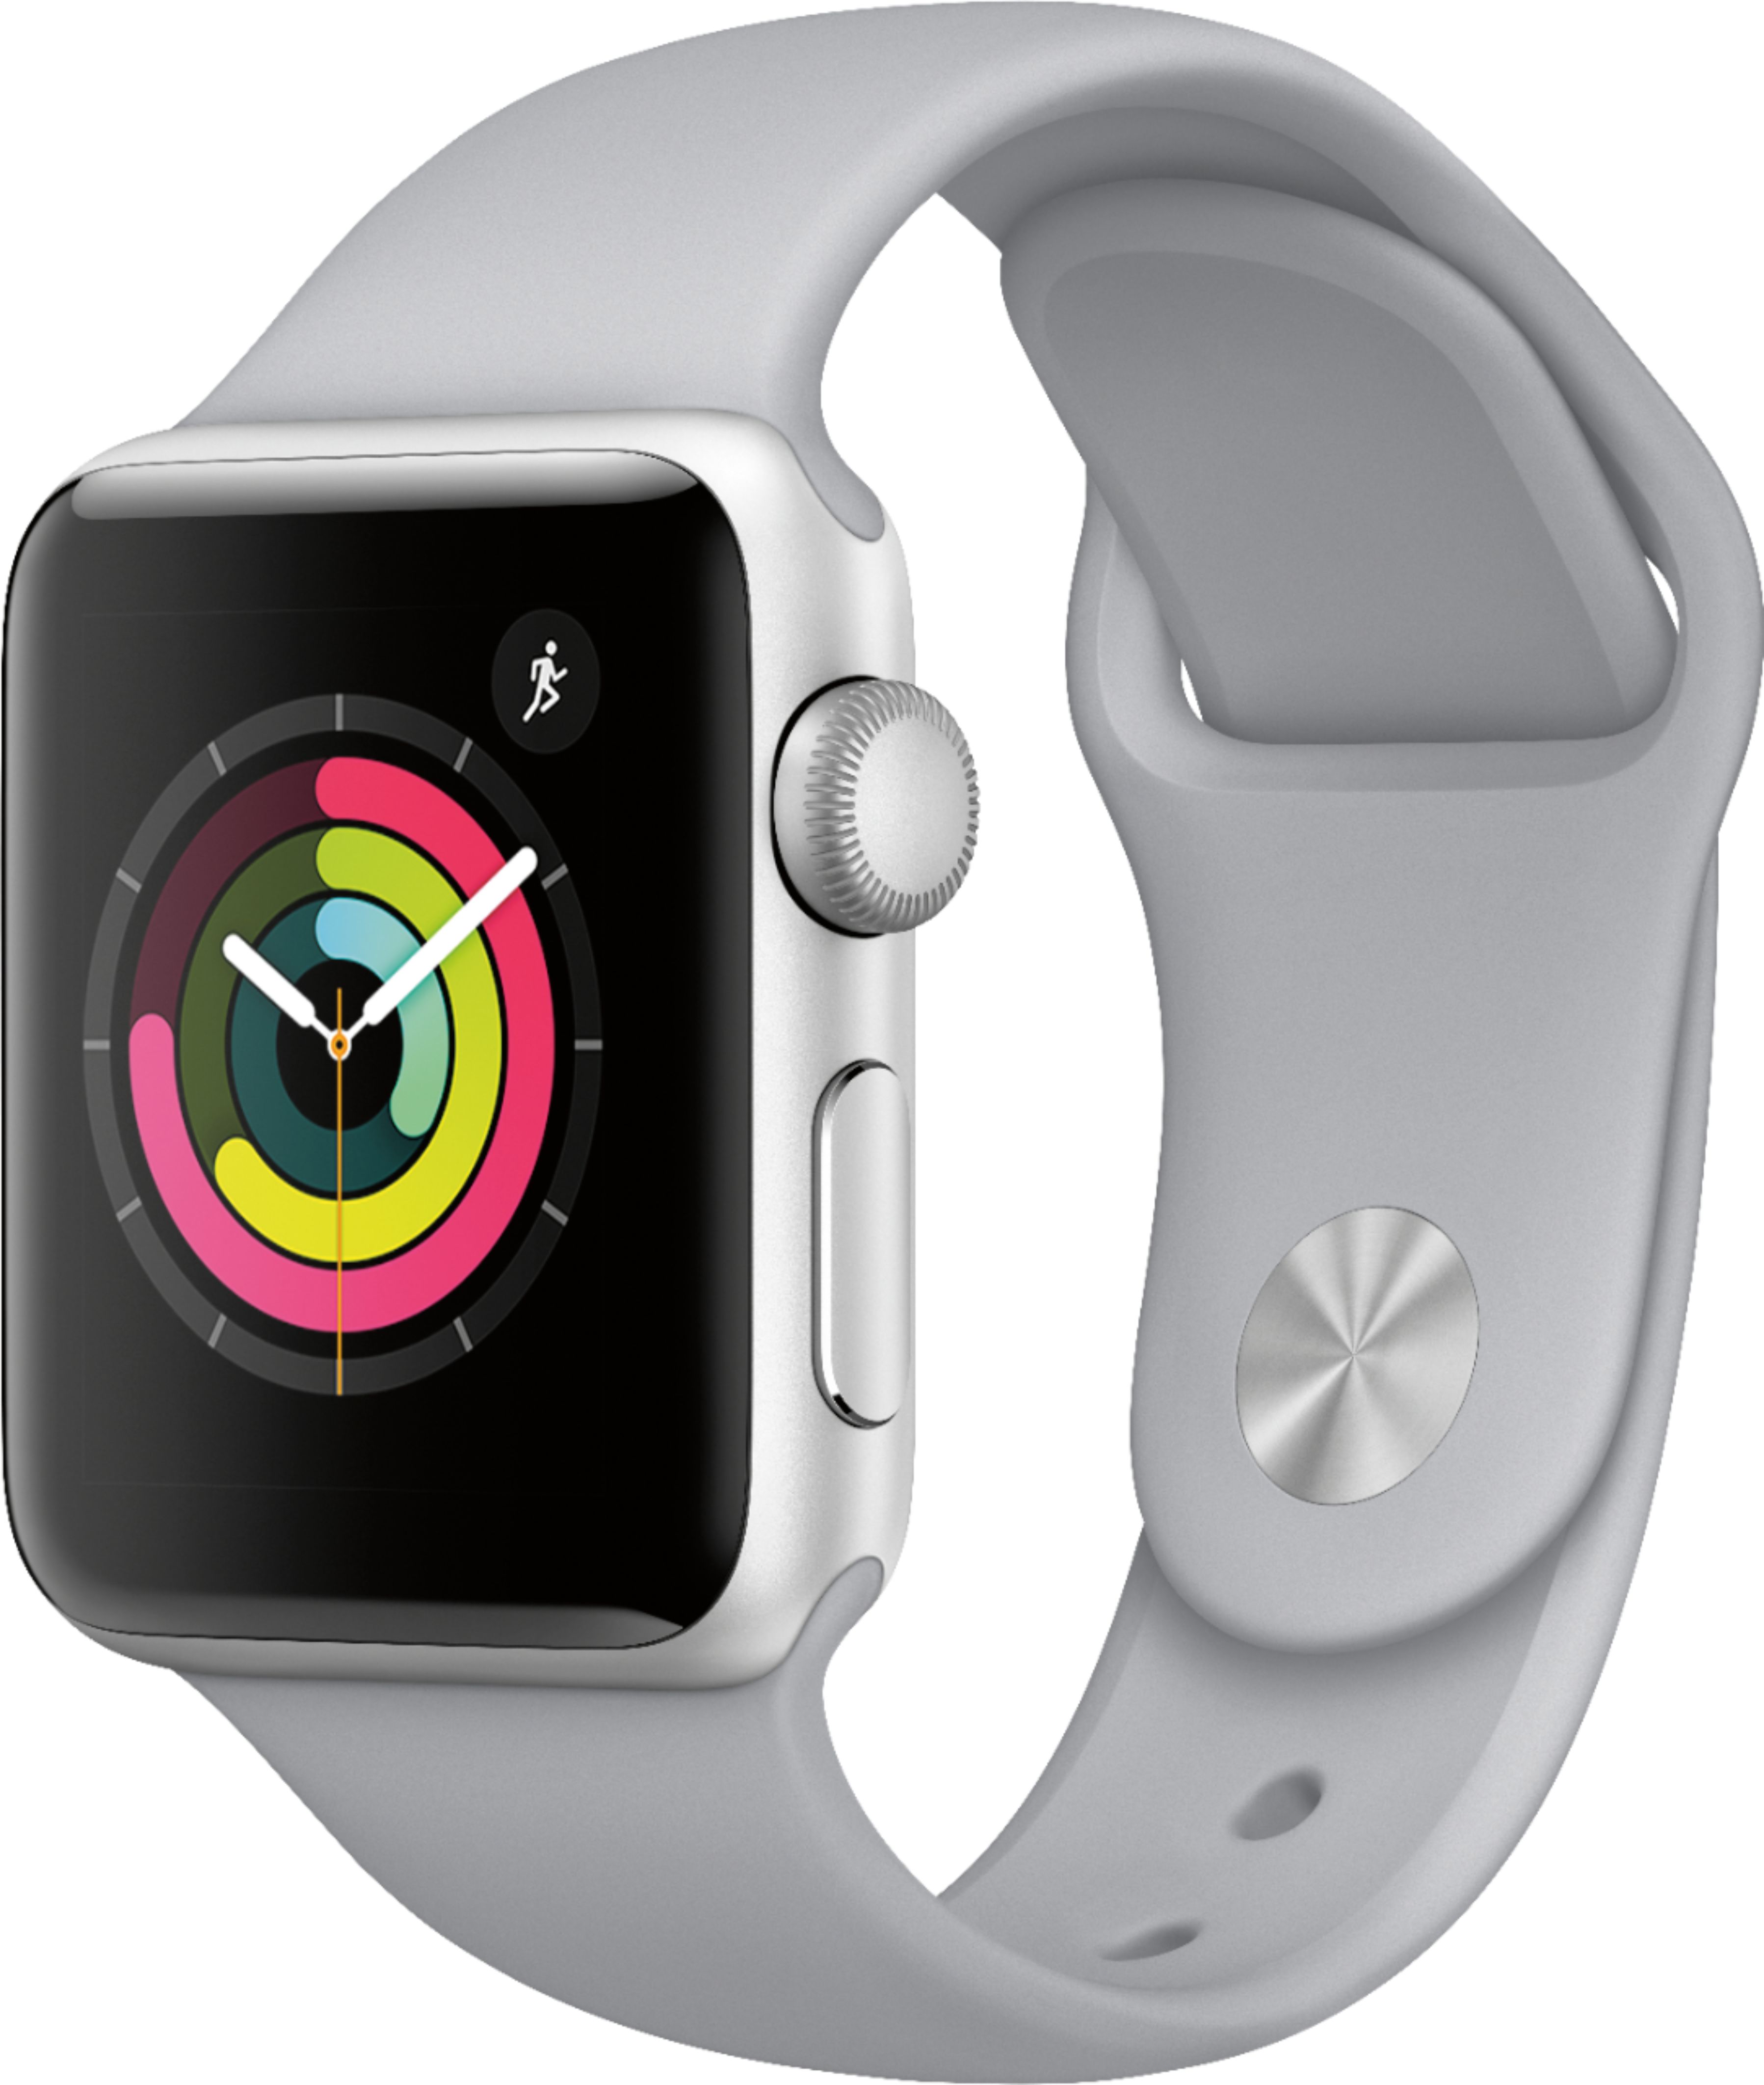 Apple Watch Series 3 (GPS), 38mm Silver Aluminum Case - Best Buy